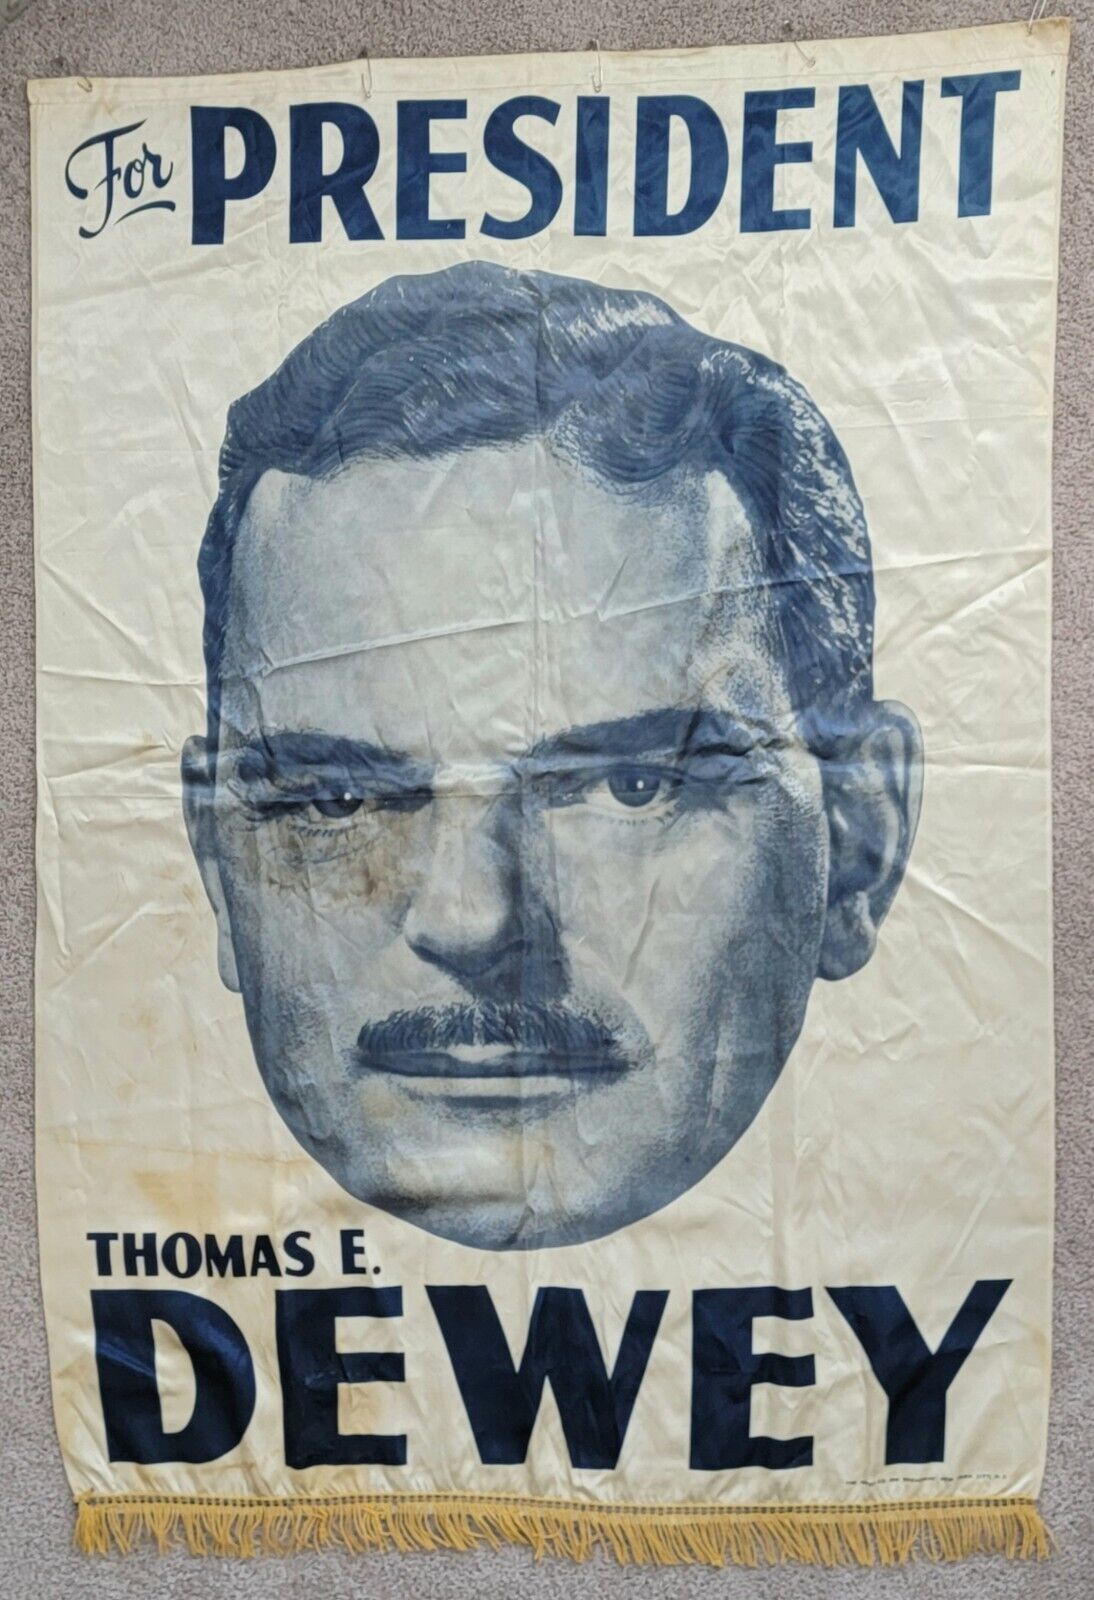 GIANT Original 1948 Thomas E. DEWEY For PRESIDENT Campaign Banner Governor of NY